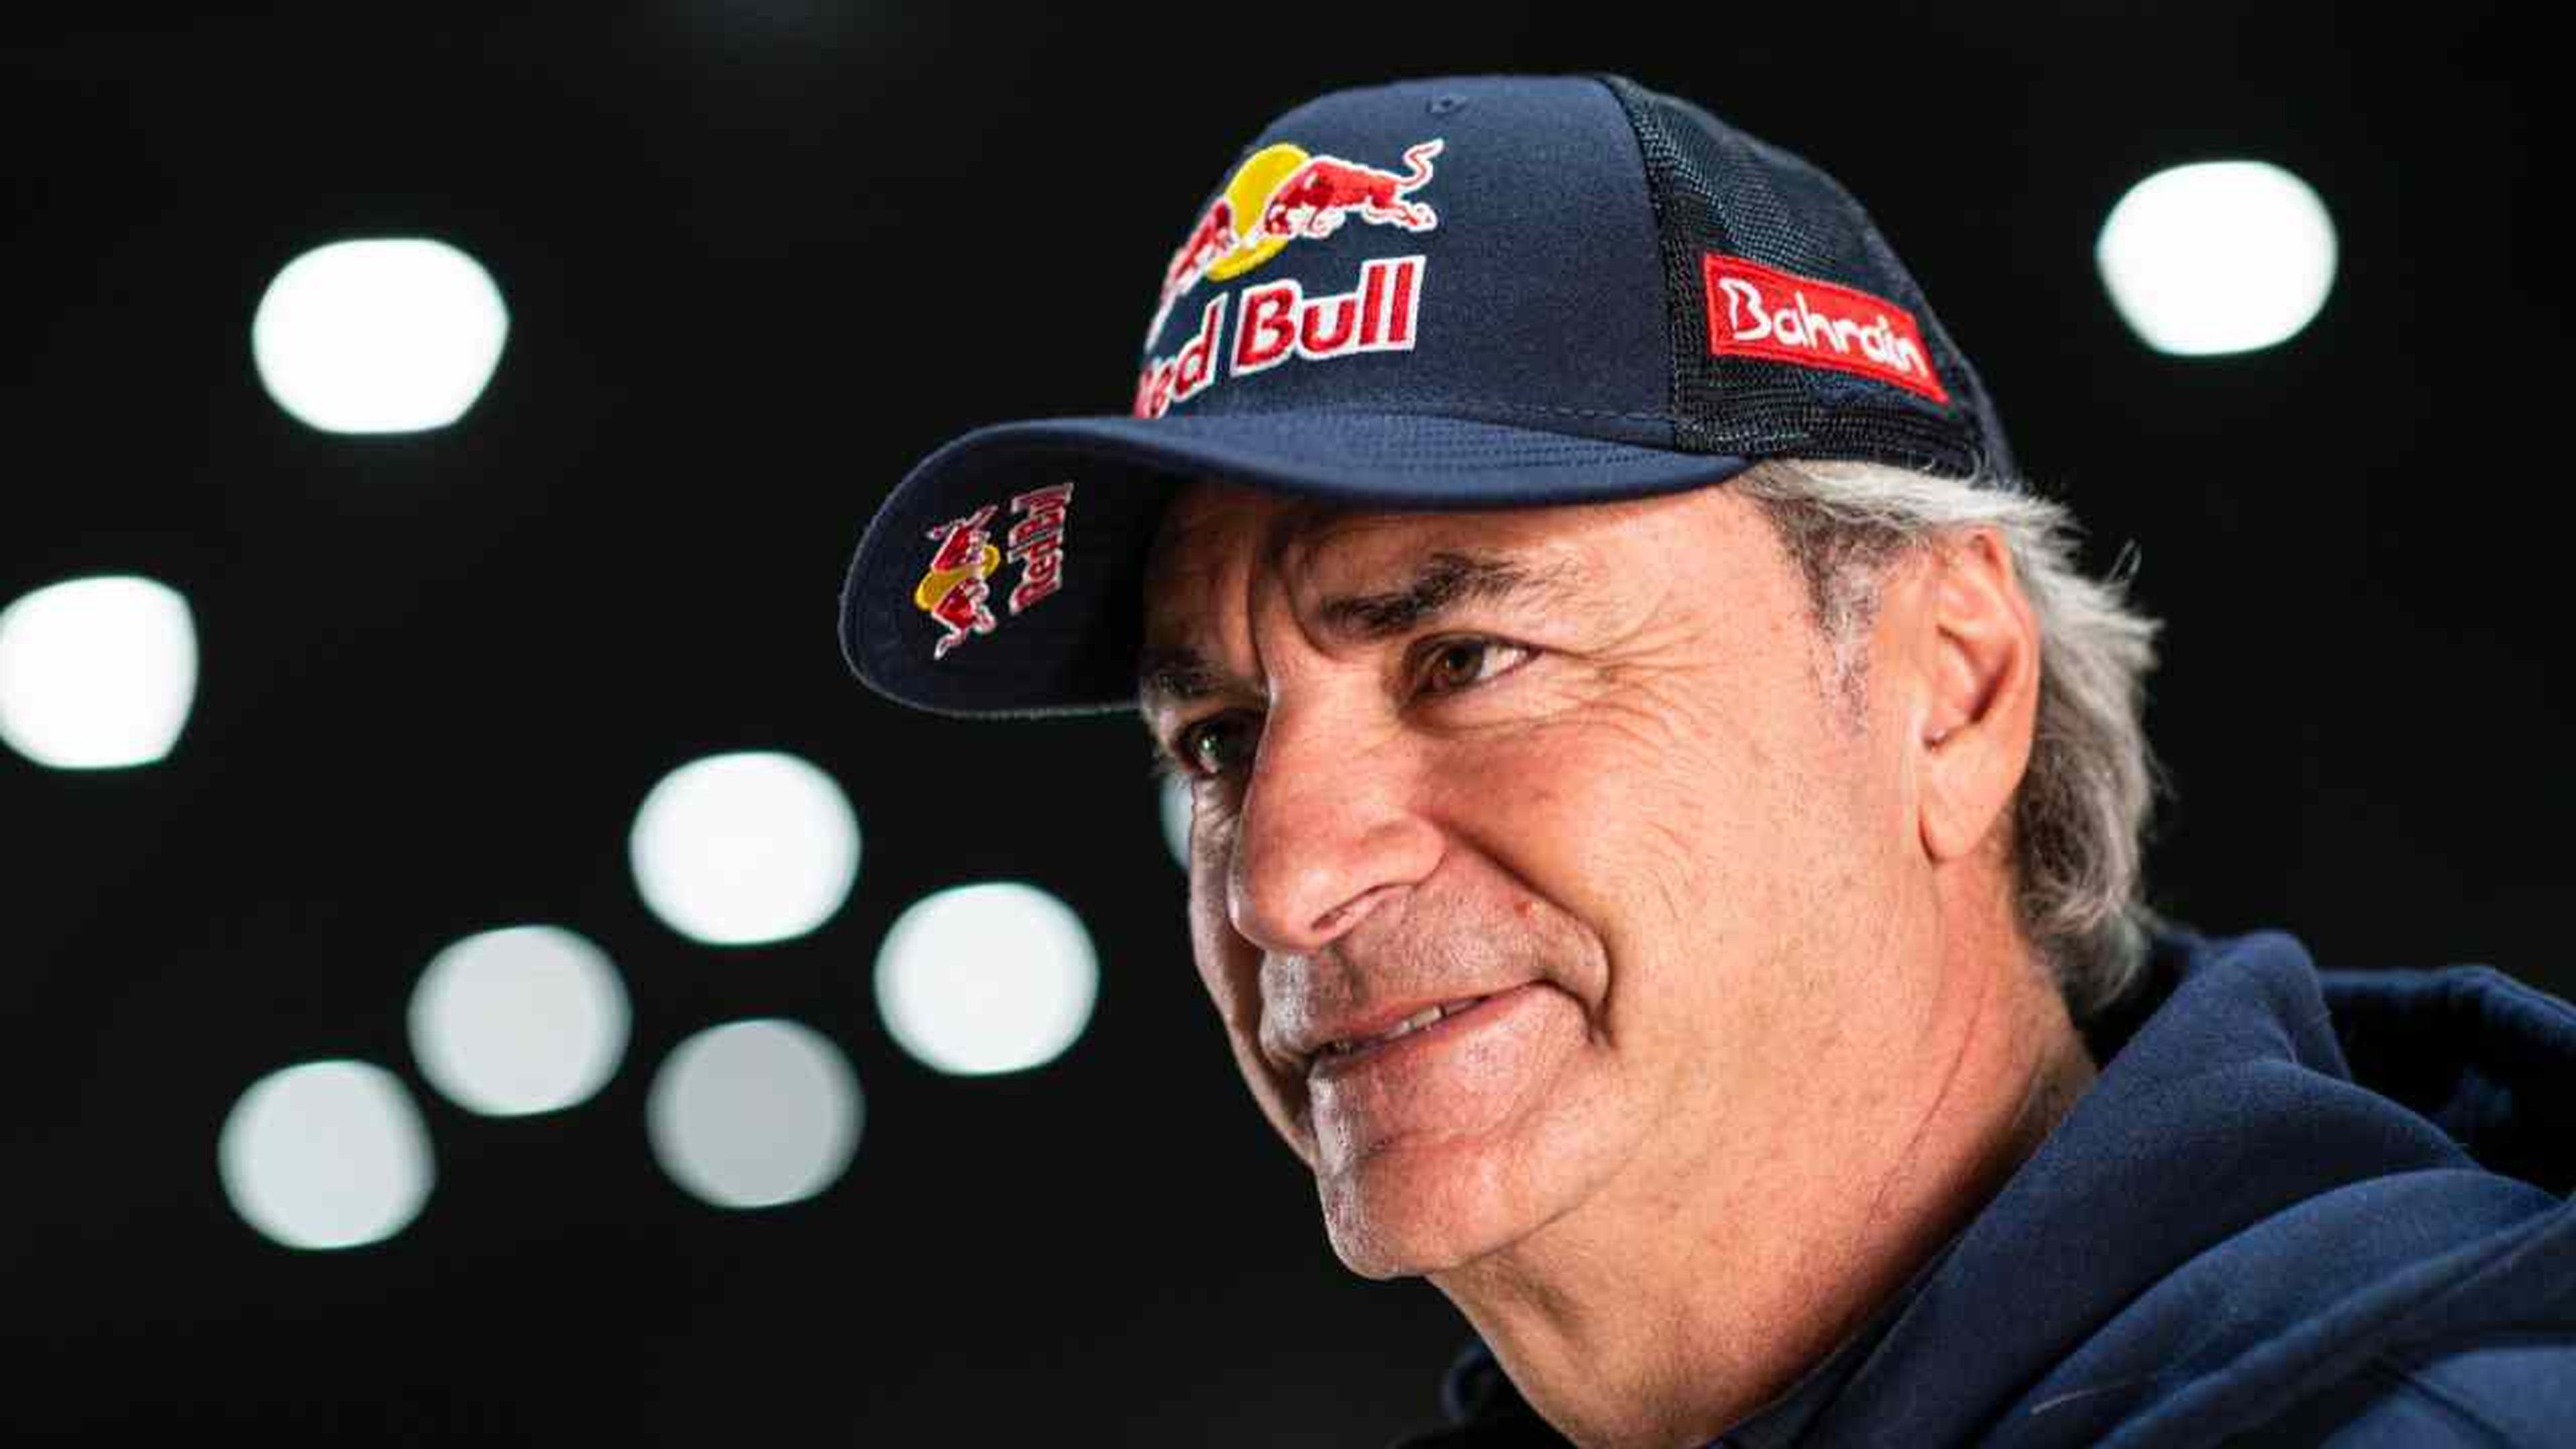 Carlos Sainz Dakar 2020